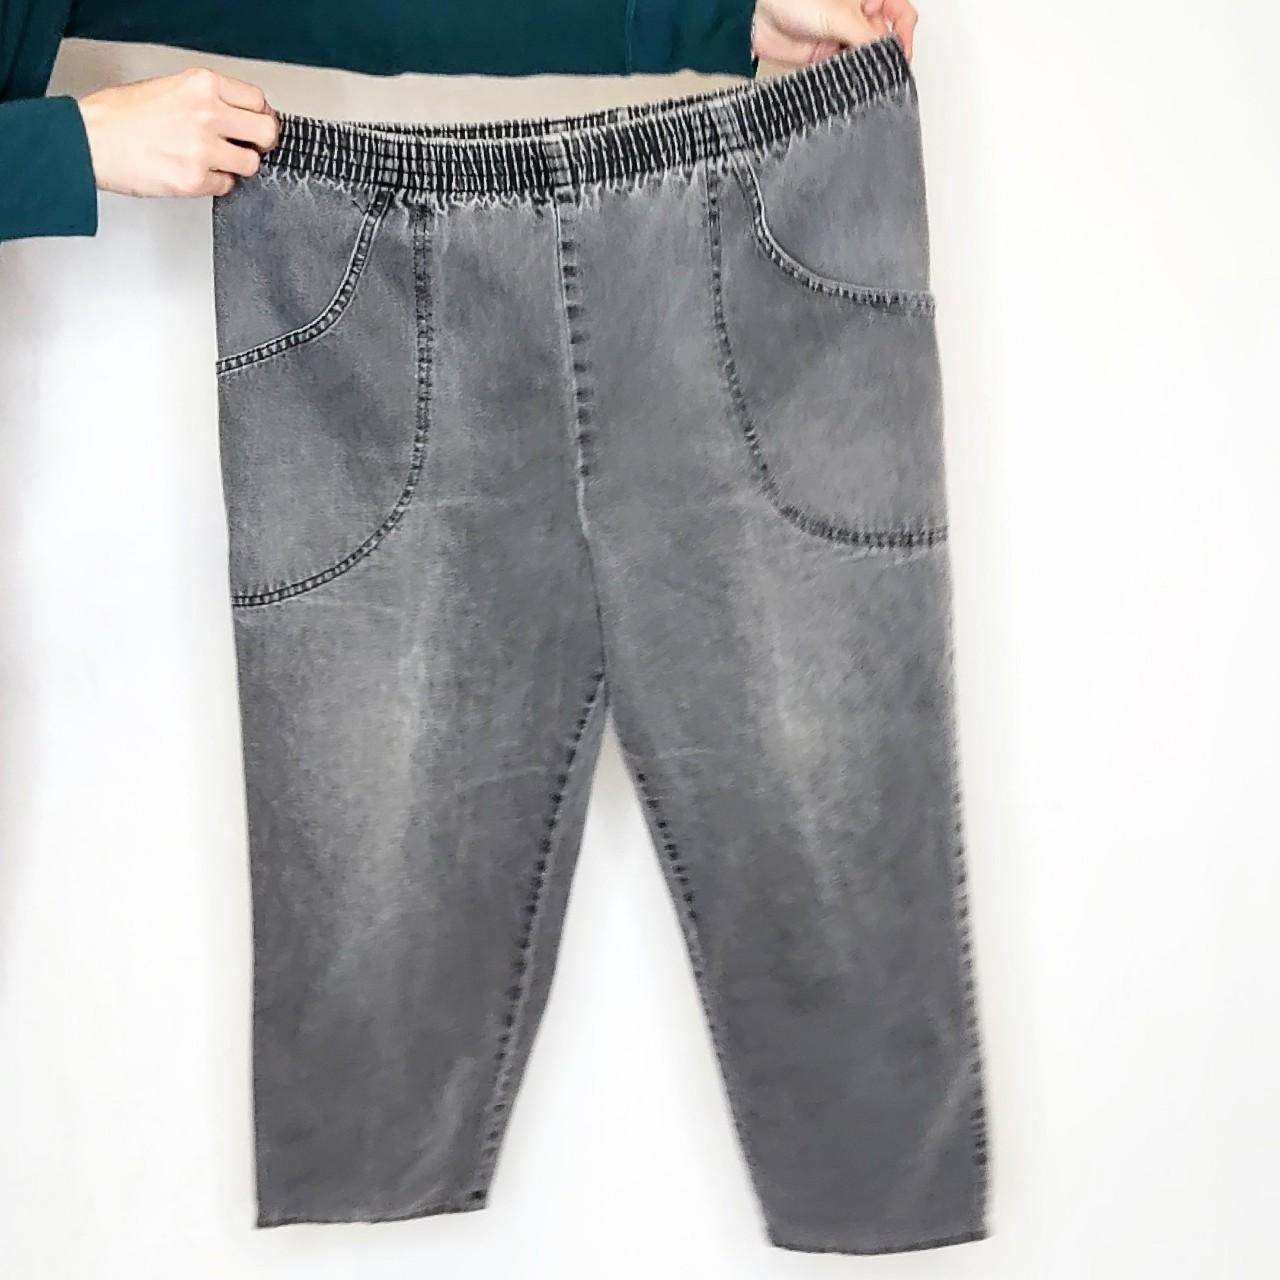 Sag Harbor Women's Grey Jeans (2)